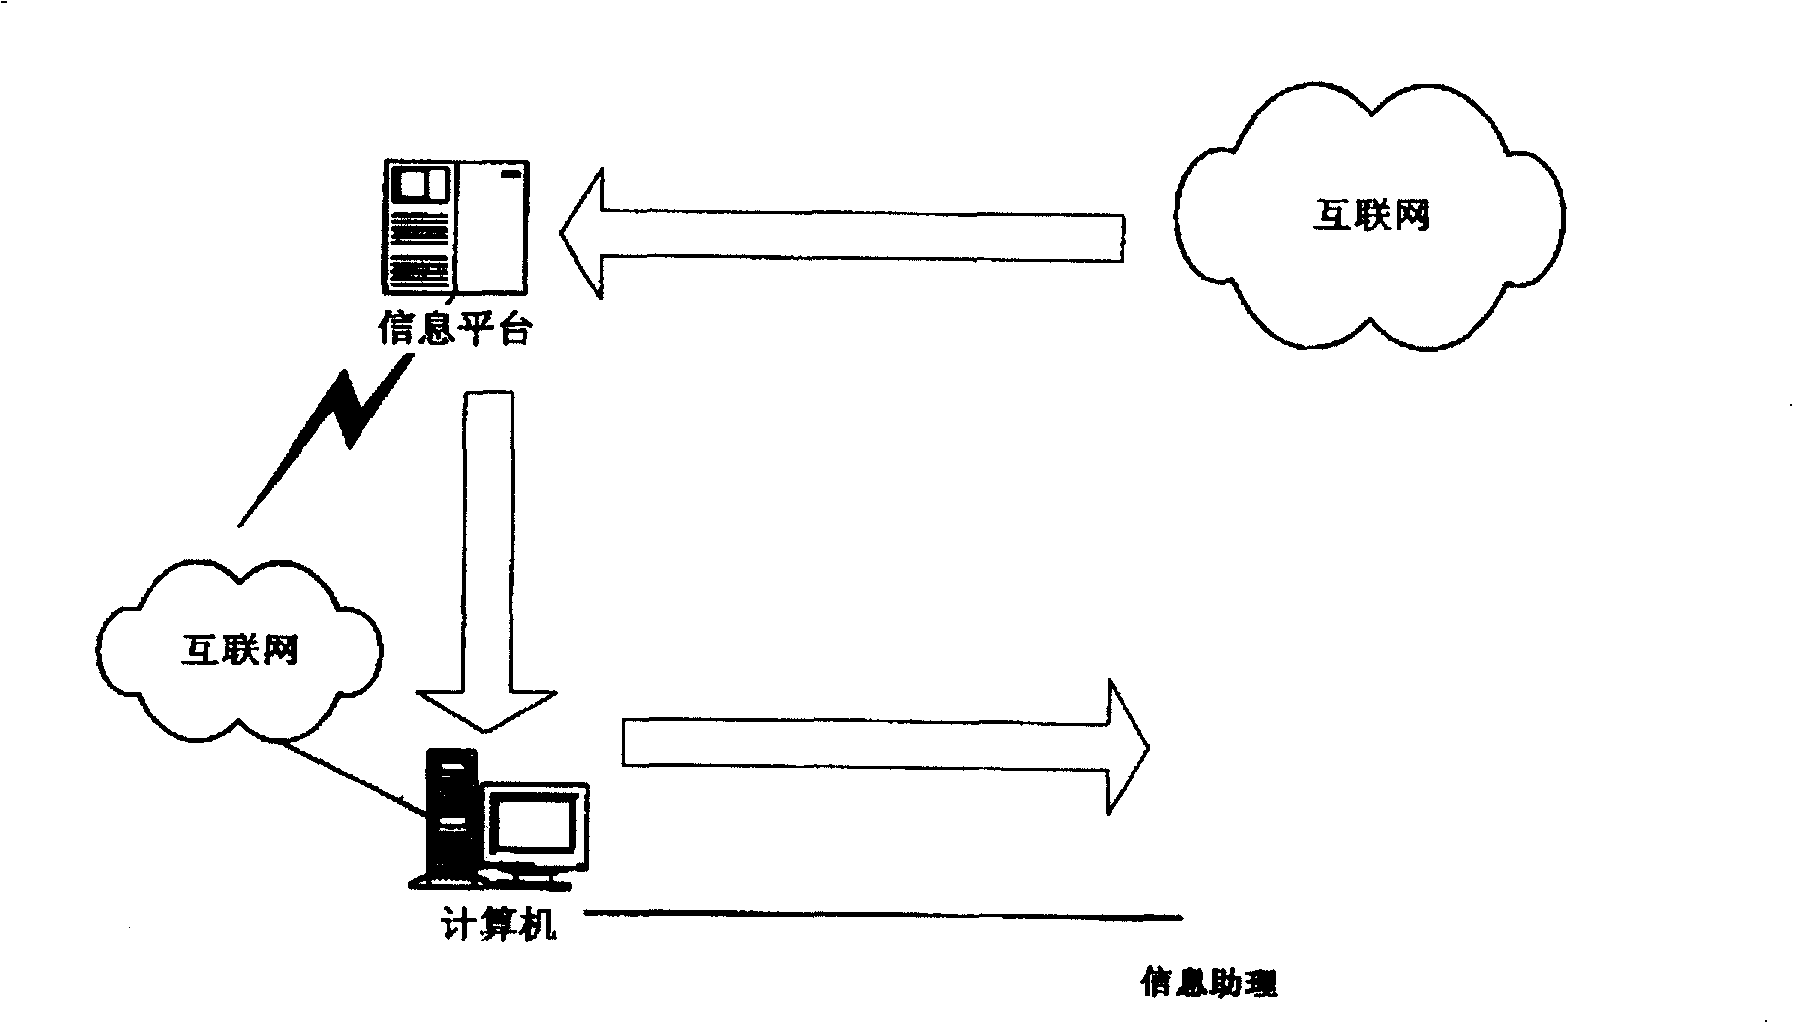 Network system for information exchange between information assistants based on Internet